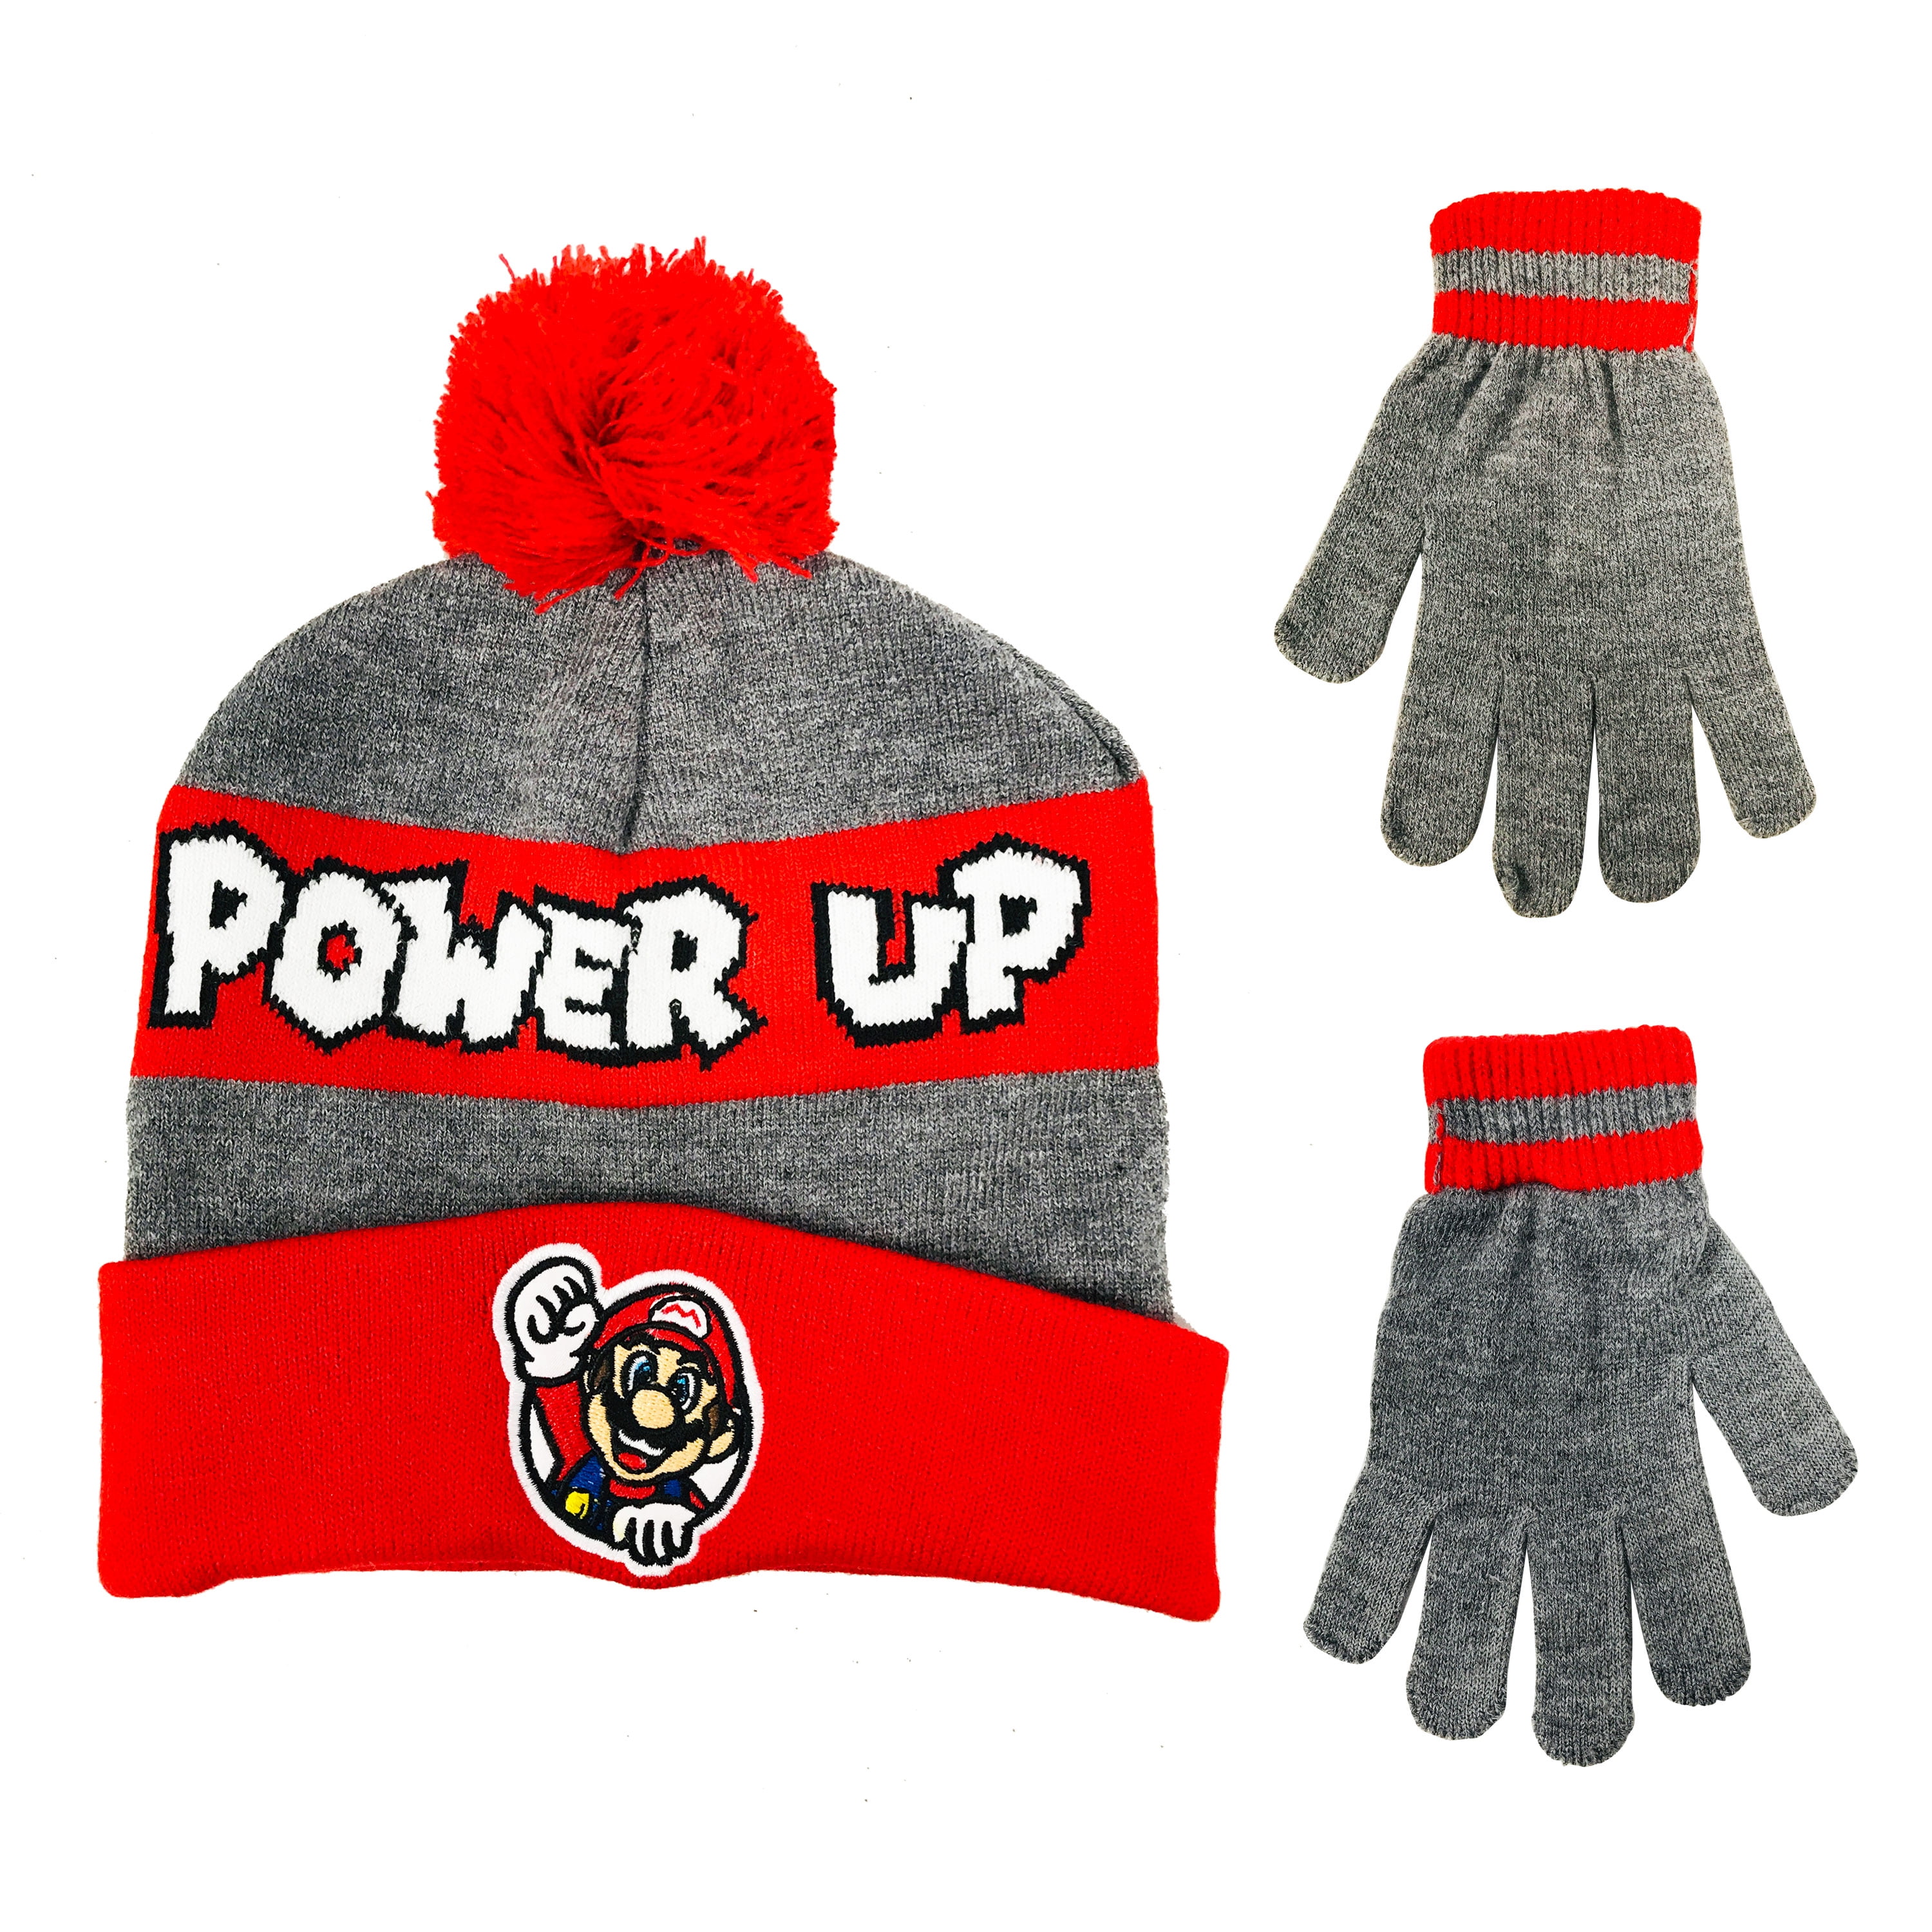 Boy's Red Black or Grey Knit Beanie Hat & Glove Set One Size 4-7 